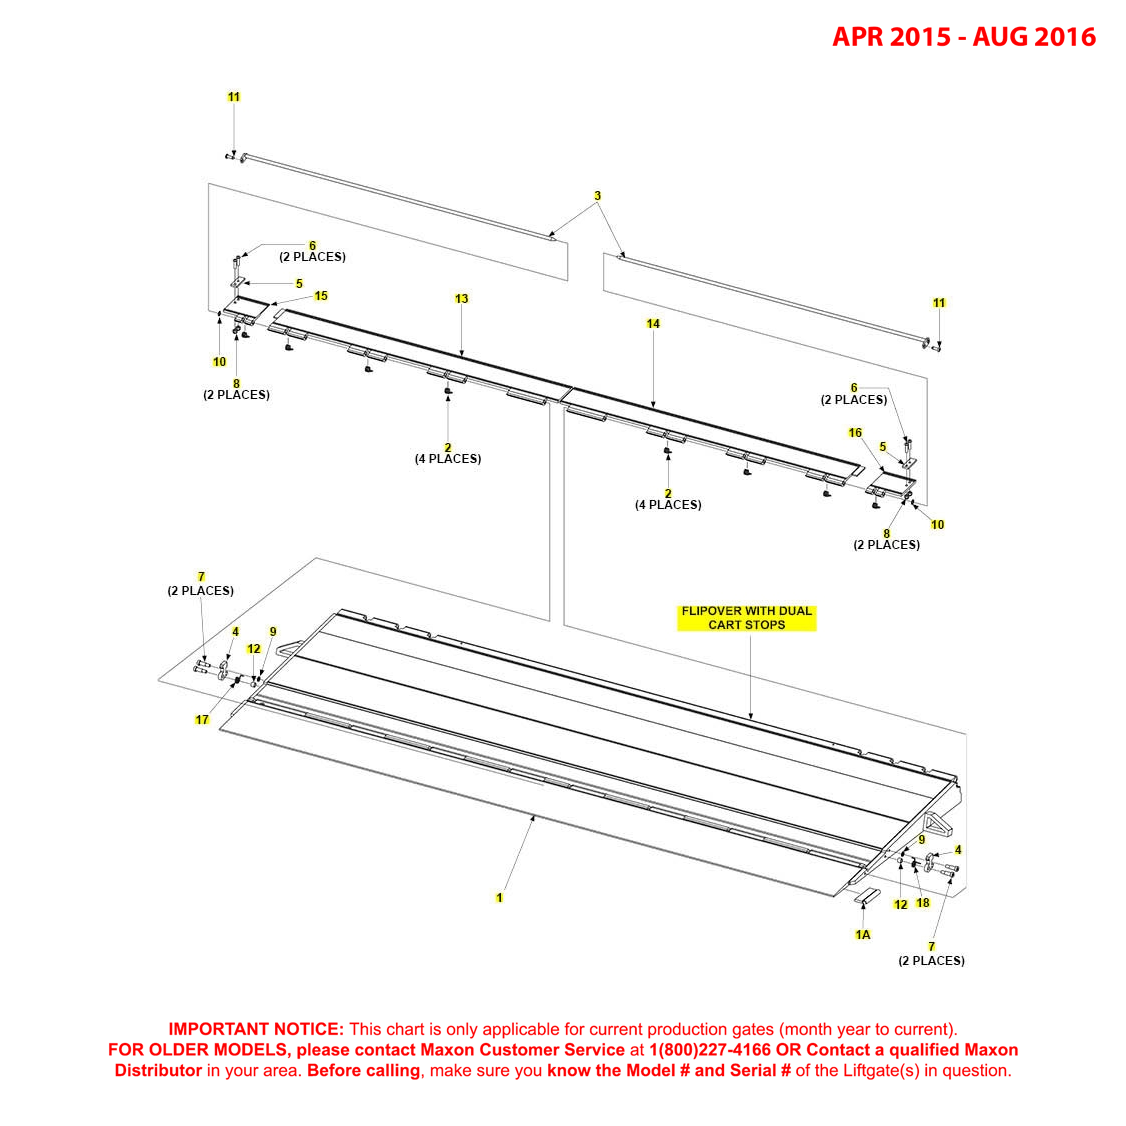 Maxon GPT (Apr 2015 - Aug 2016) Flipover With Dual Cart Stops Diagram